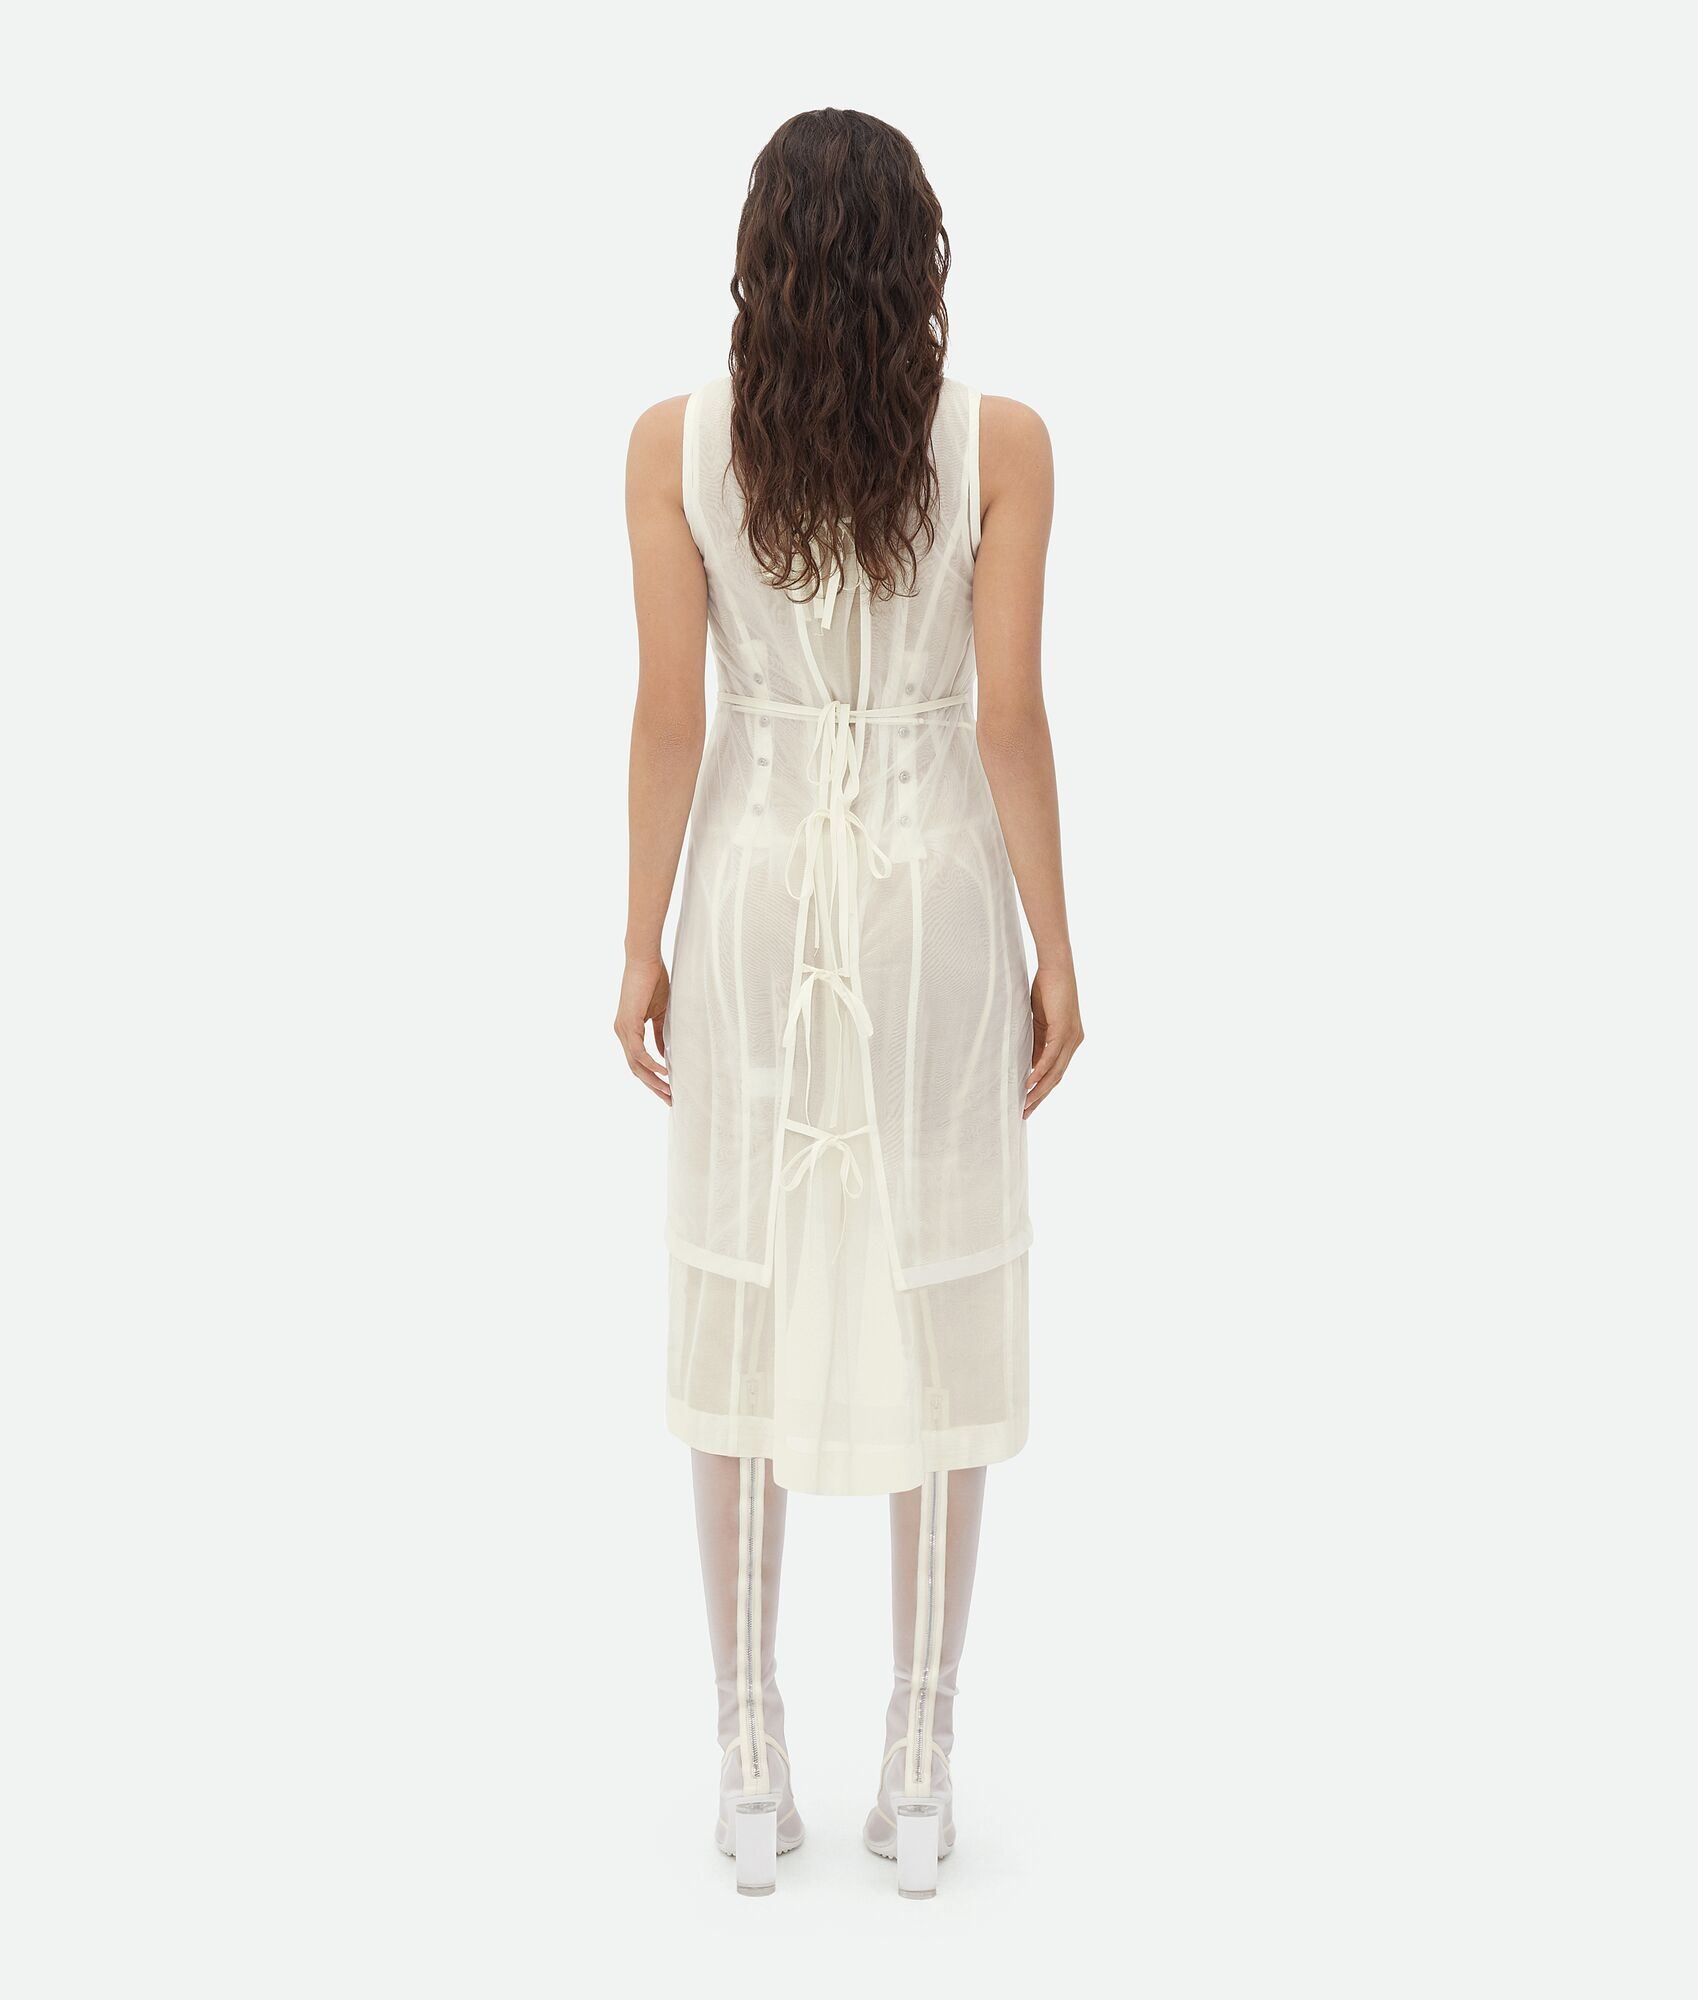 Bottega Veneta® Women's Stretch Rib Cotton Dress in Chalk. Shop